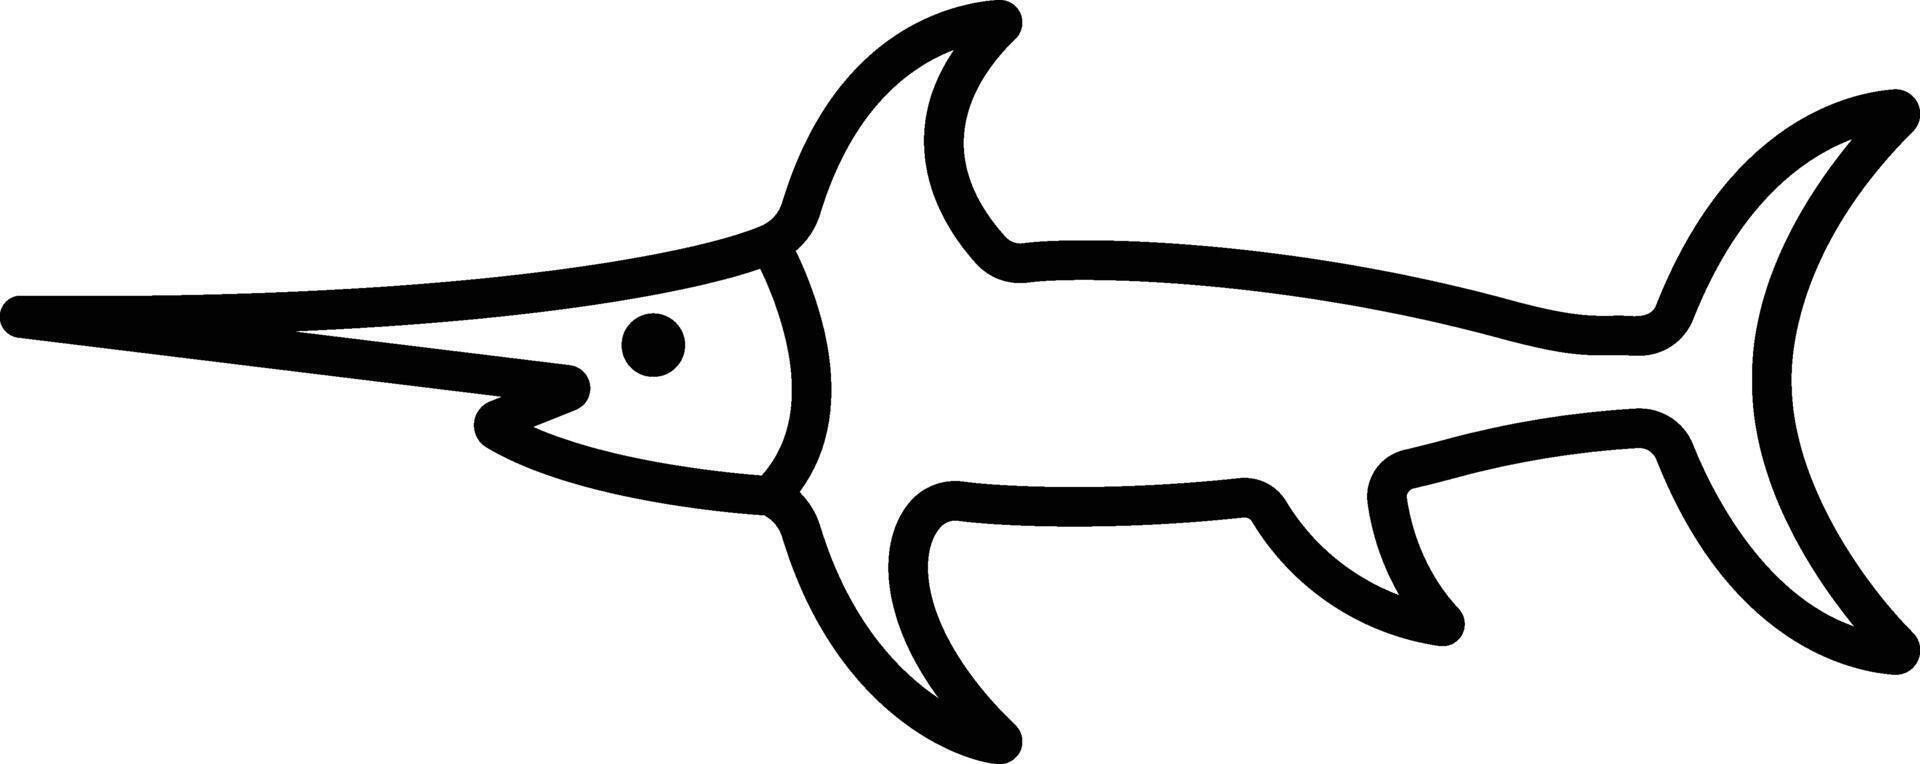 Swordtail fish outline illustration vector